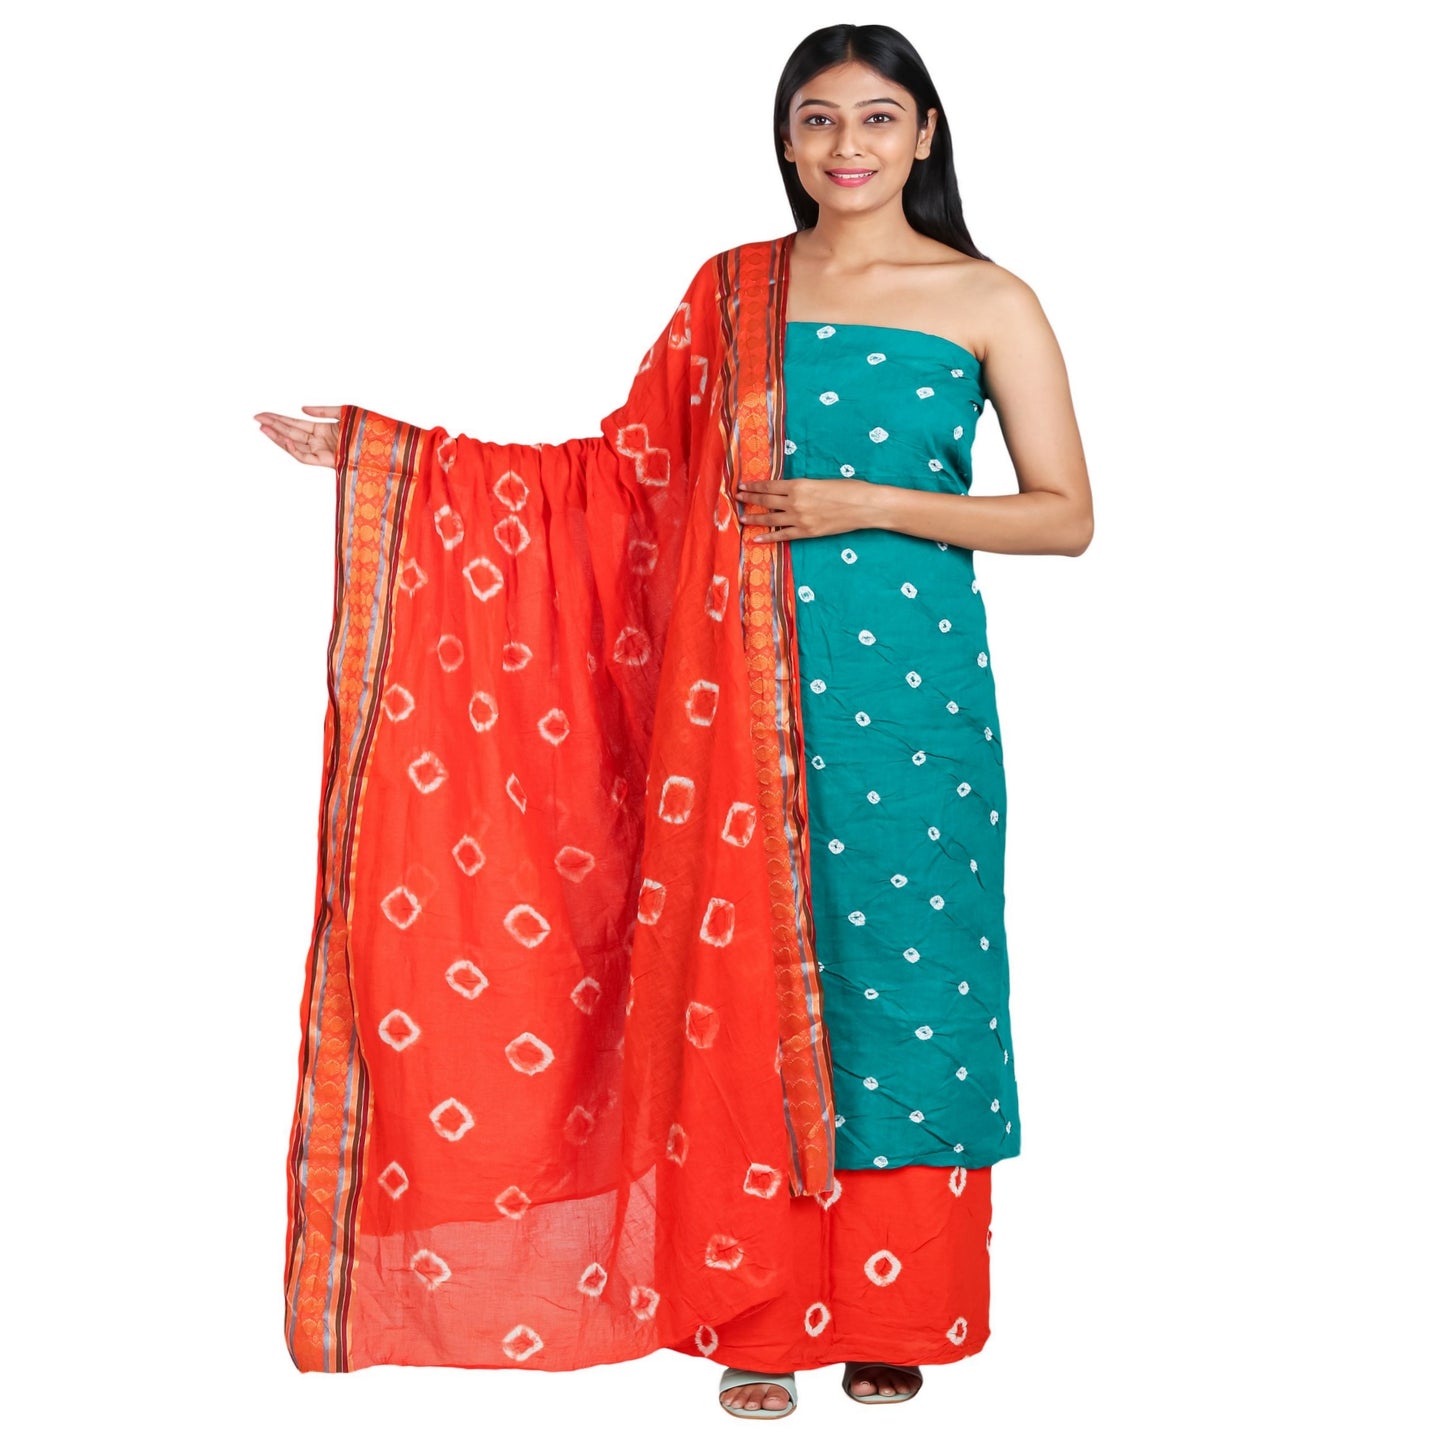 Teal cotton bandhani dress material orange bottom and dupatta all with white bandhej prints, dupatta has golden border